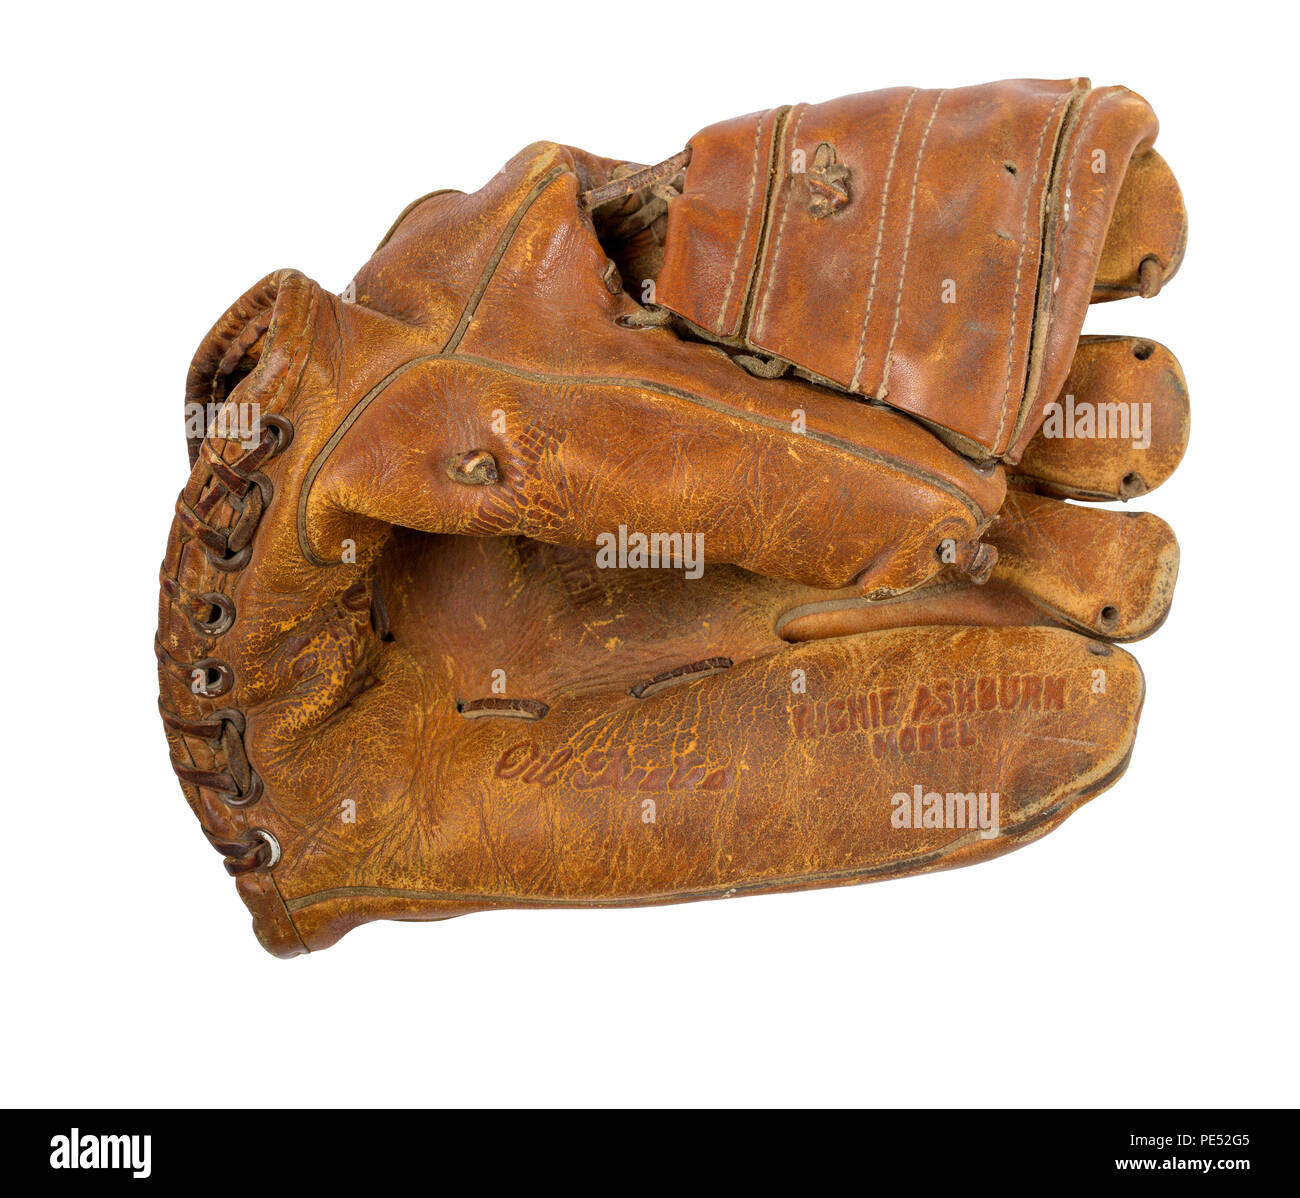 A vintage 1950s Hutch model 40L Richie Ashburn autographed baseball glove Stock Photo